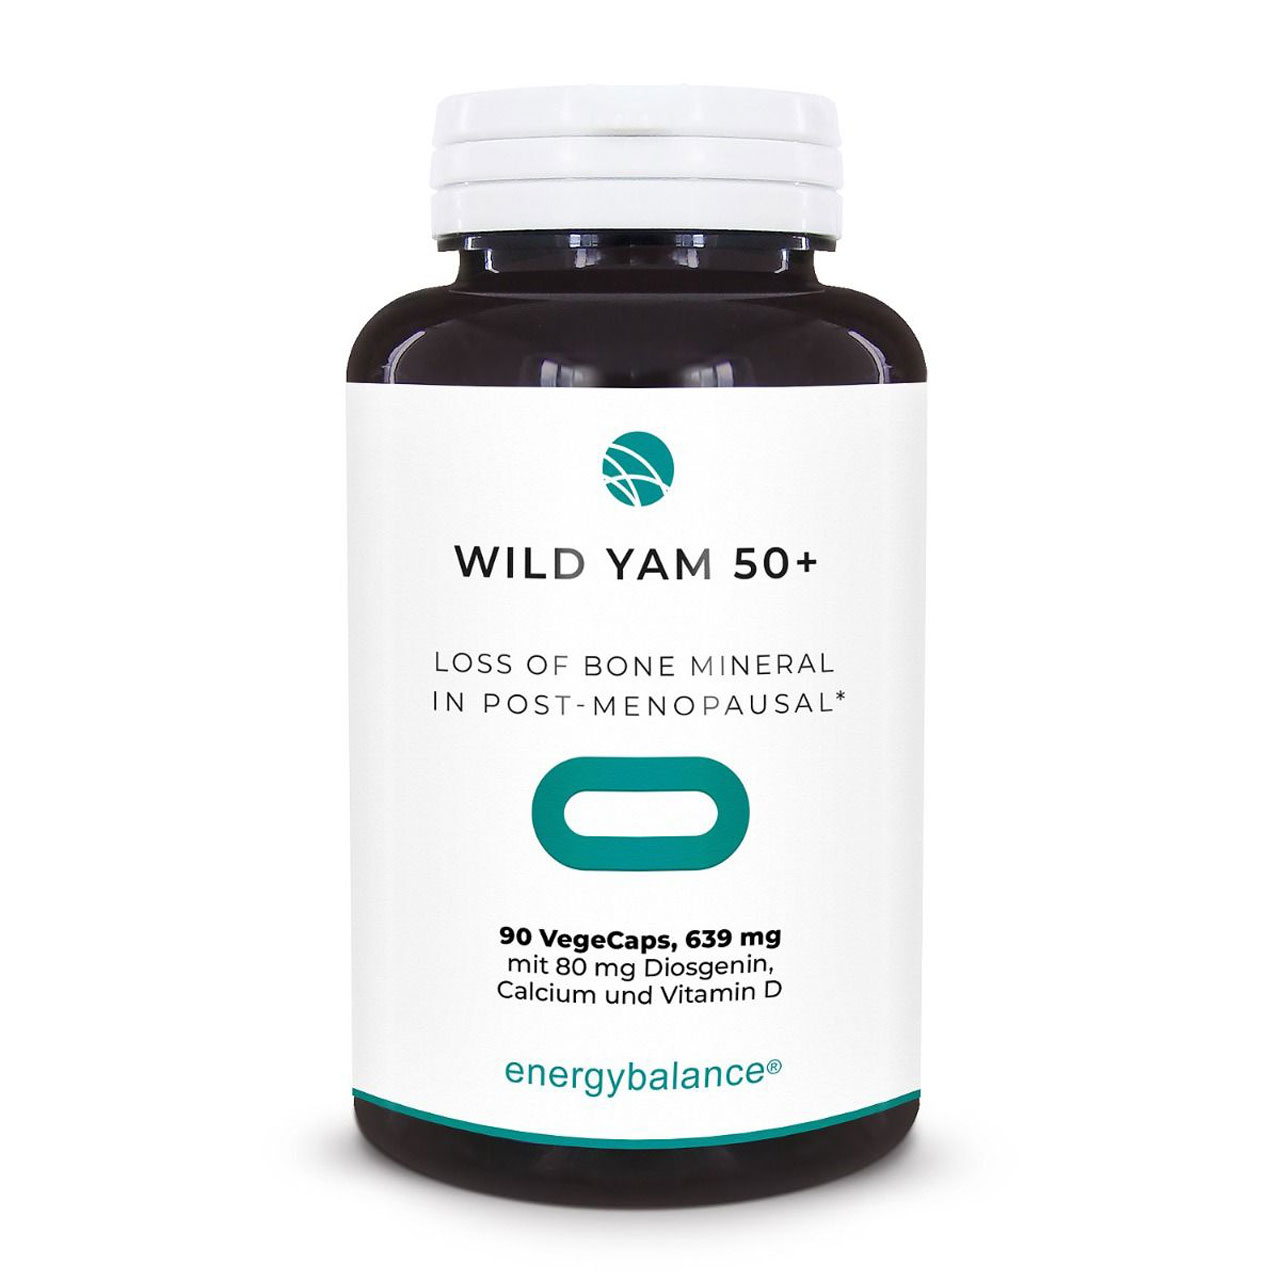 Wild Yam 50+ con calcio y vitamina D, 90 VegeCaps